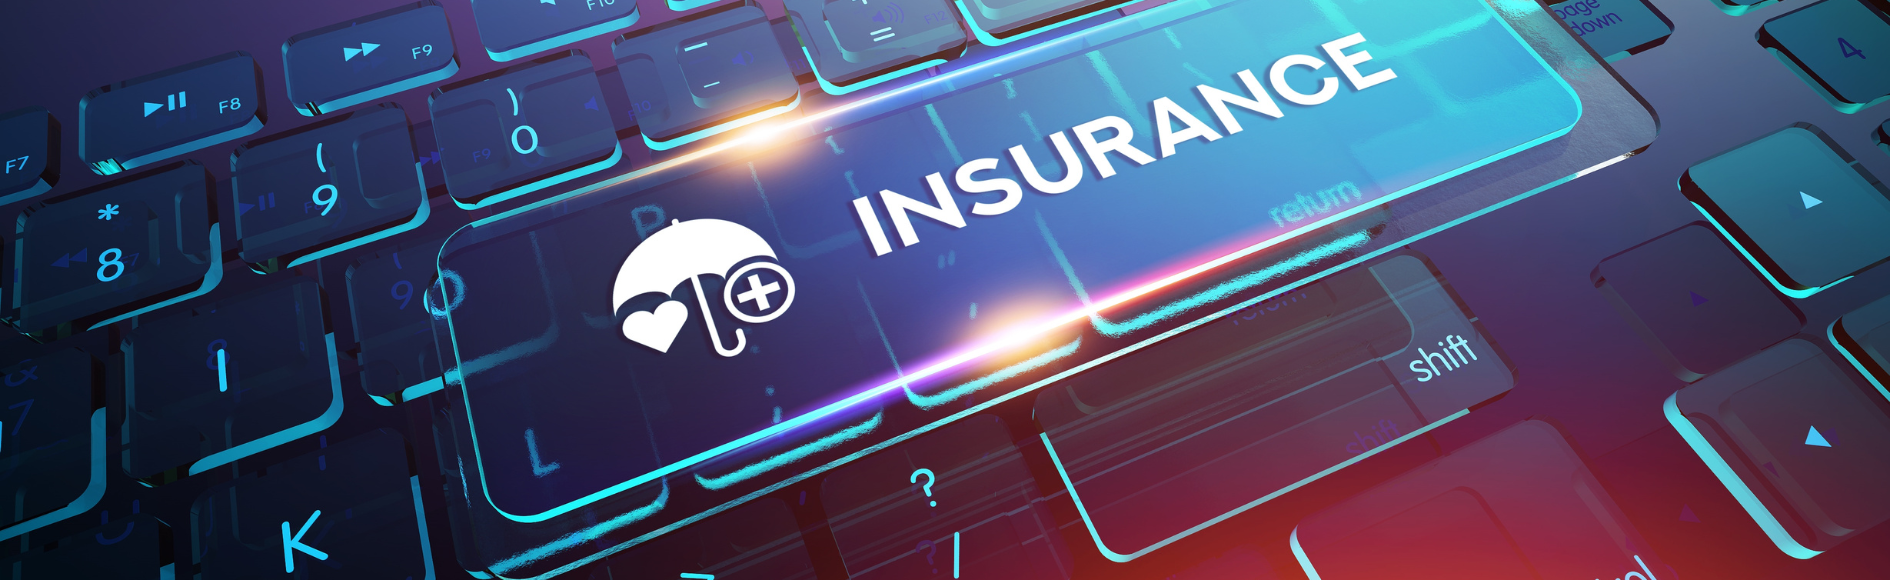 Umbrella Insurance - Orr Insurance & Investment